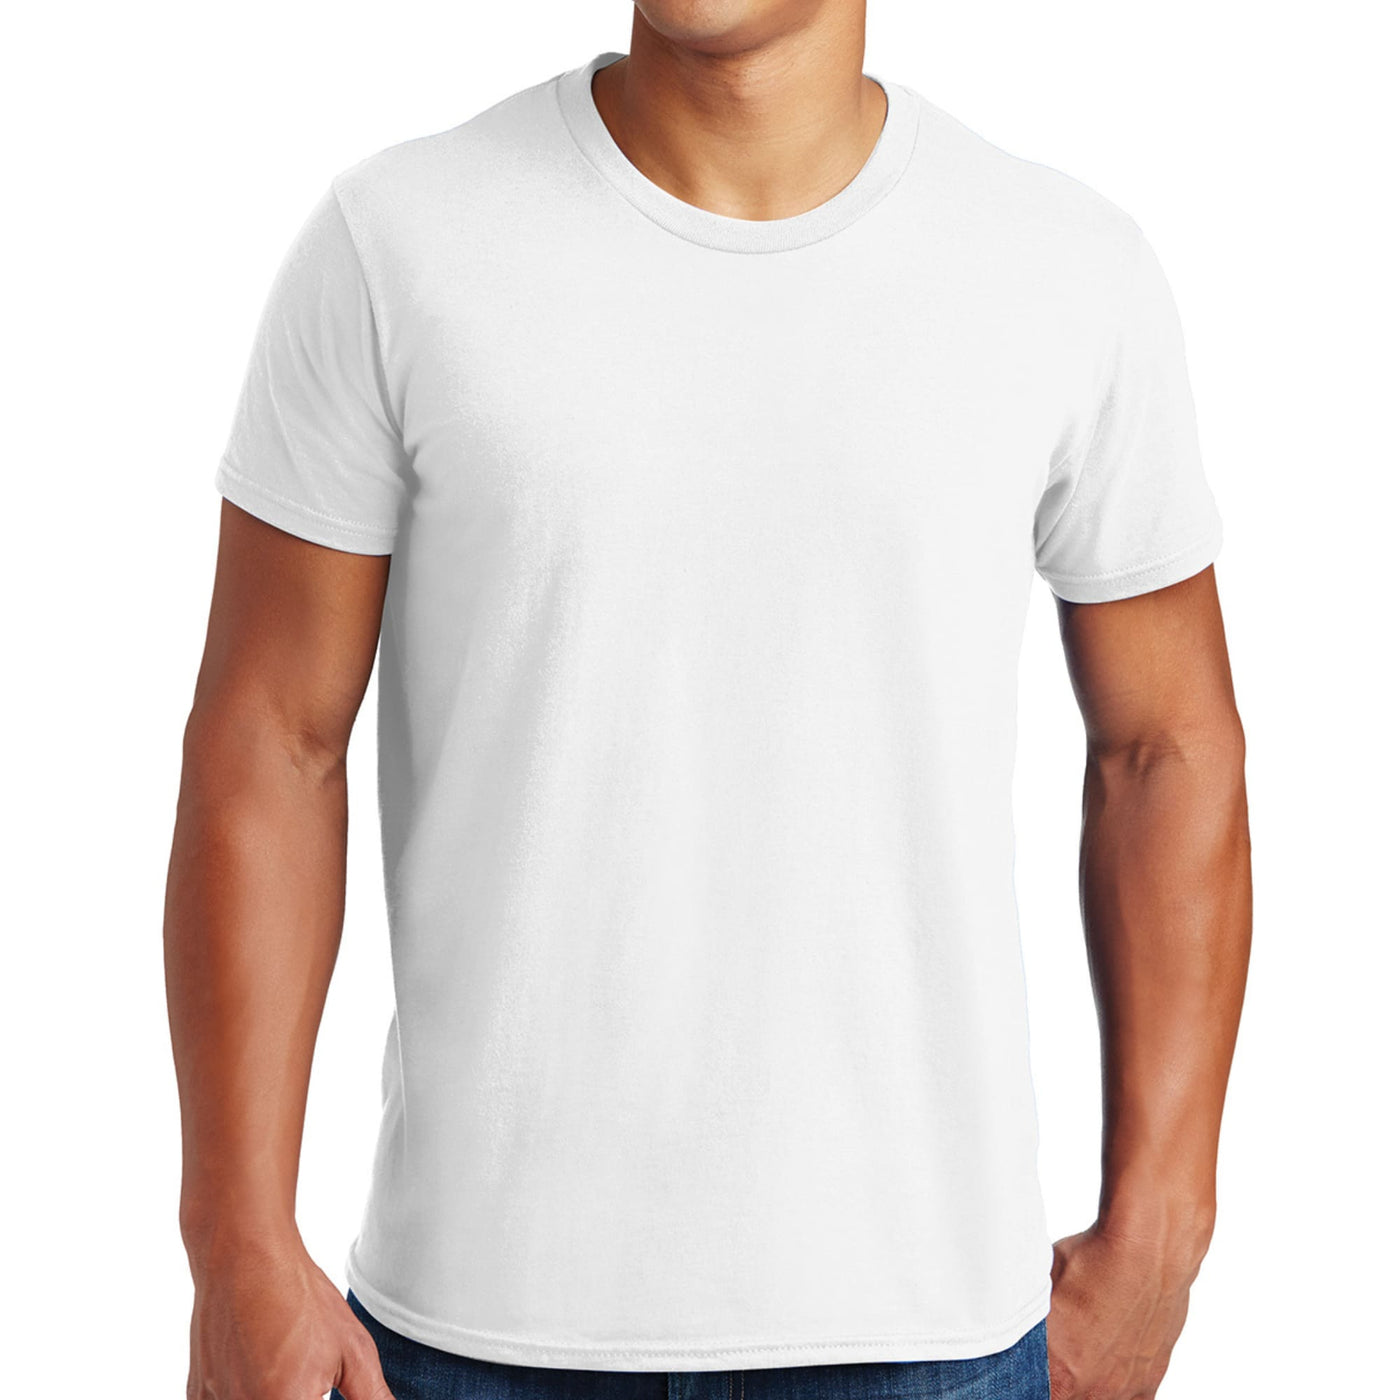 Gildan - Softstyle T - shirts 640000 Multipack Bundle Deals | Clothing